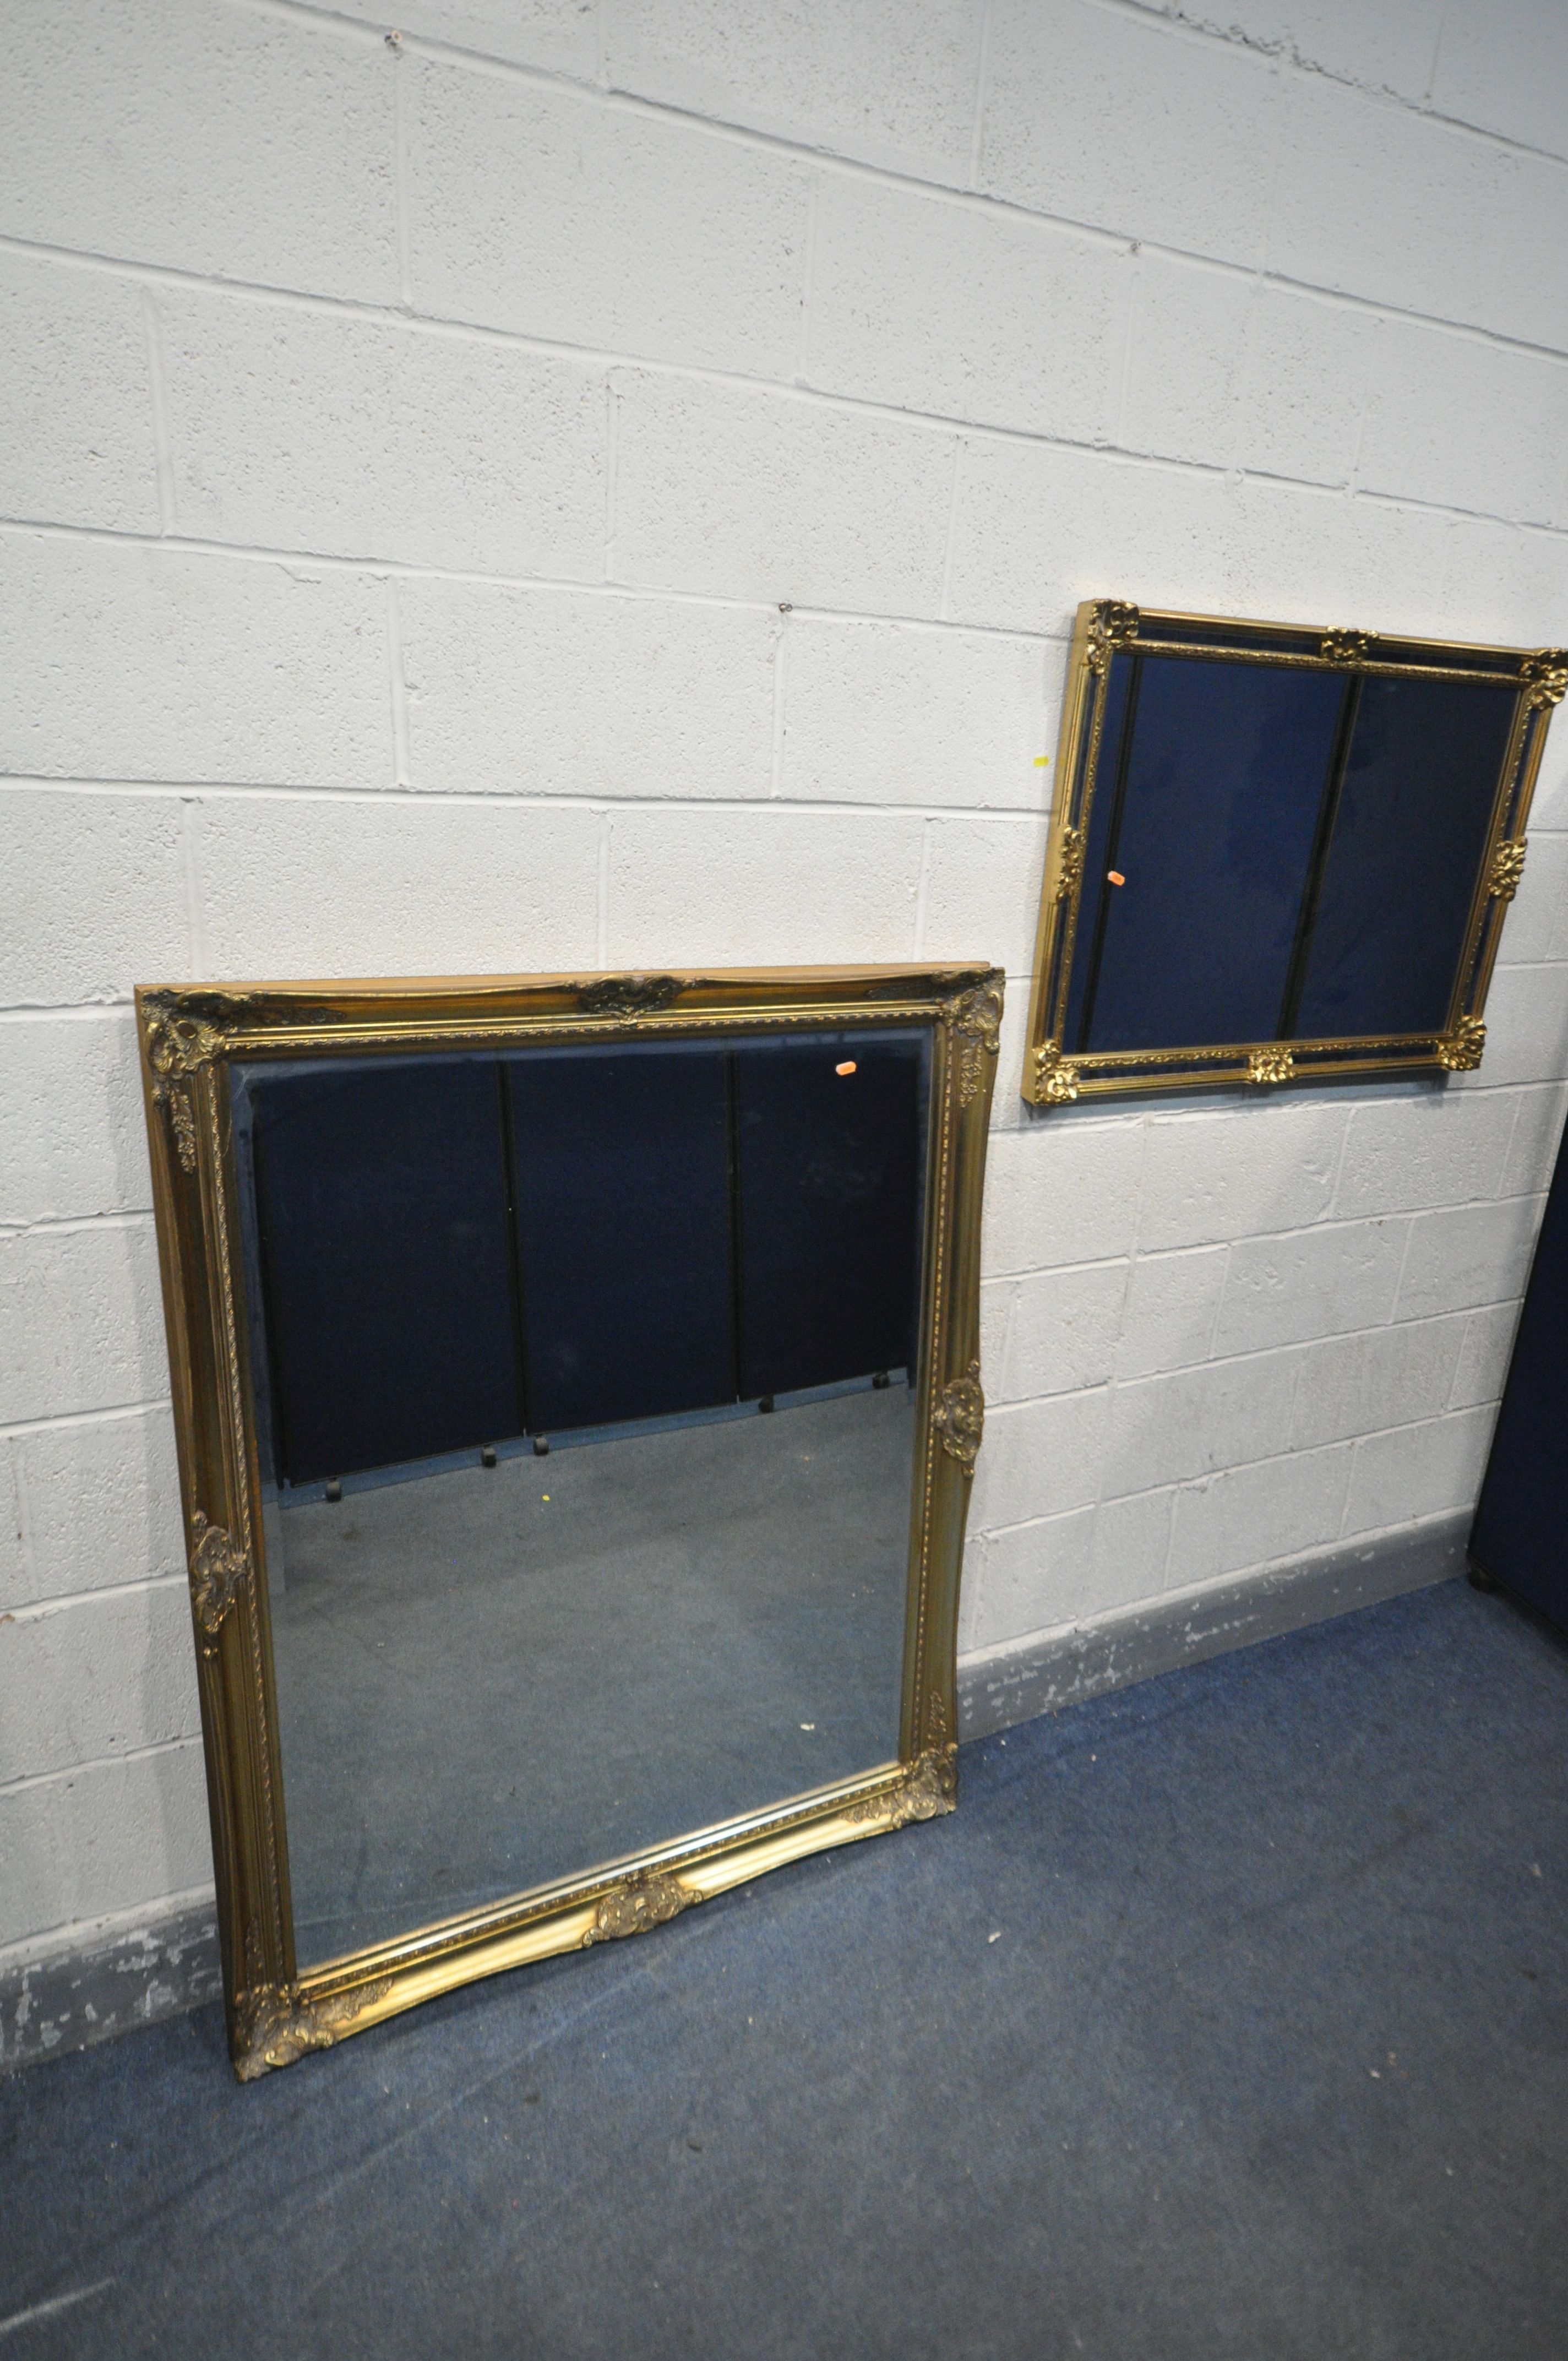 A LARGE GILT FRAMED BEVELLED EDGE MIRROR, 133cm x 107cm, along with another gilt framed mirror